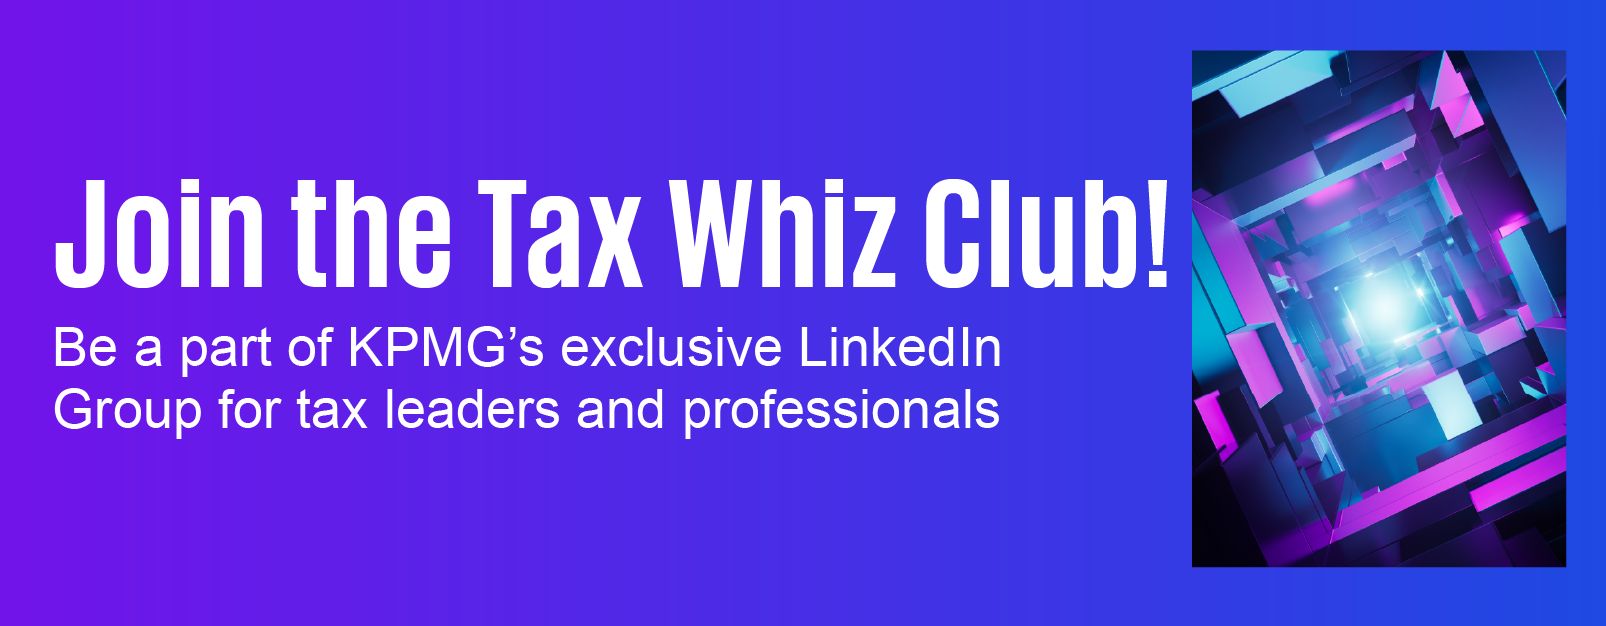 Tax whiz club